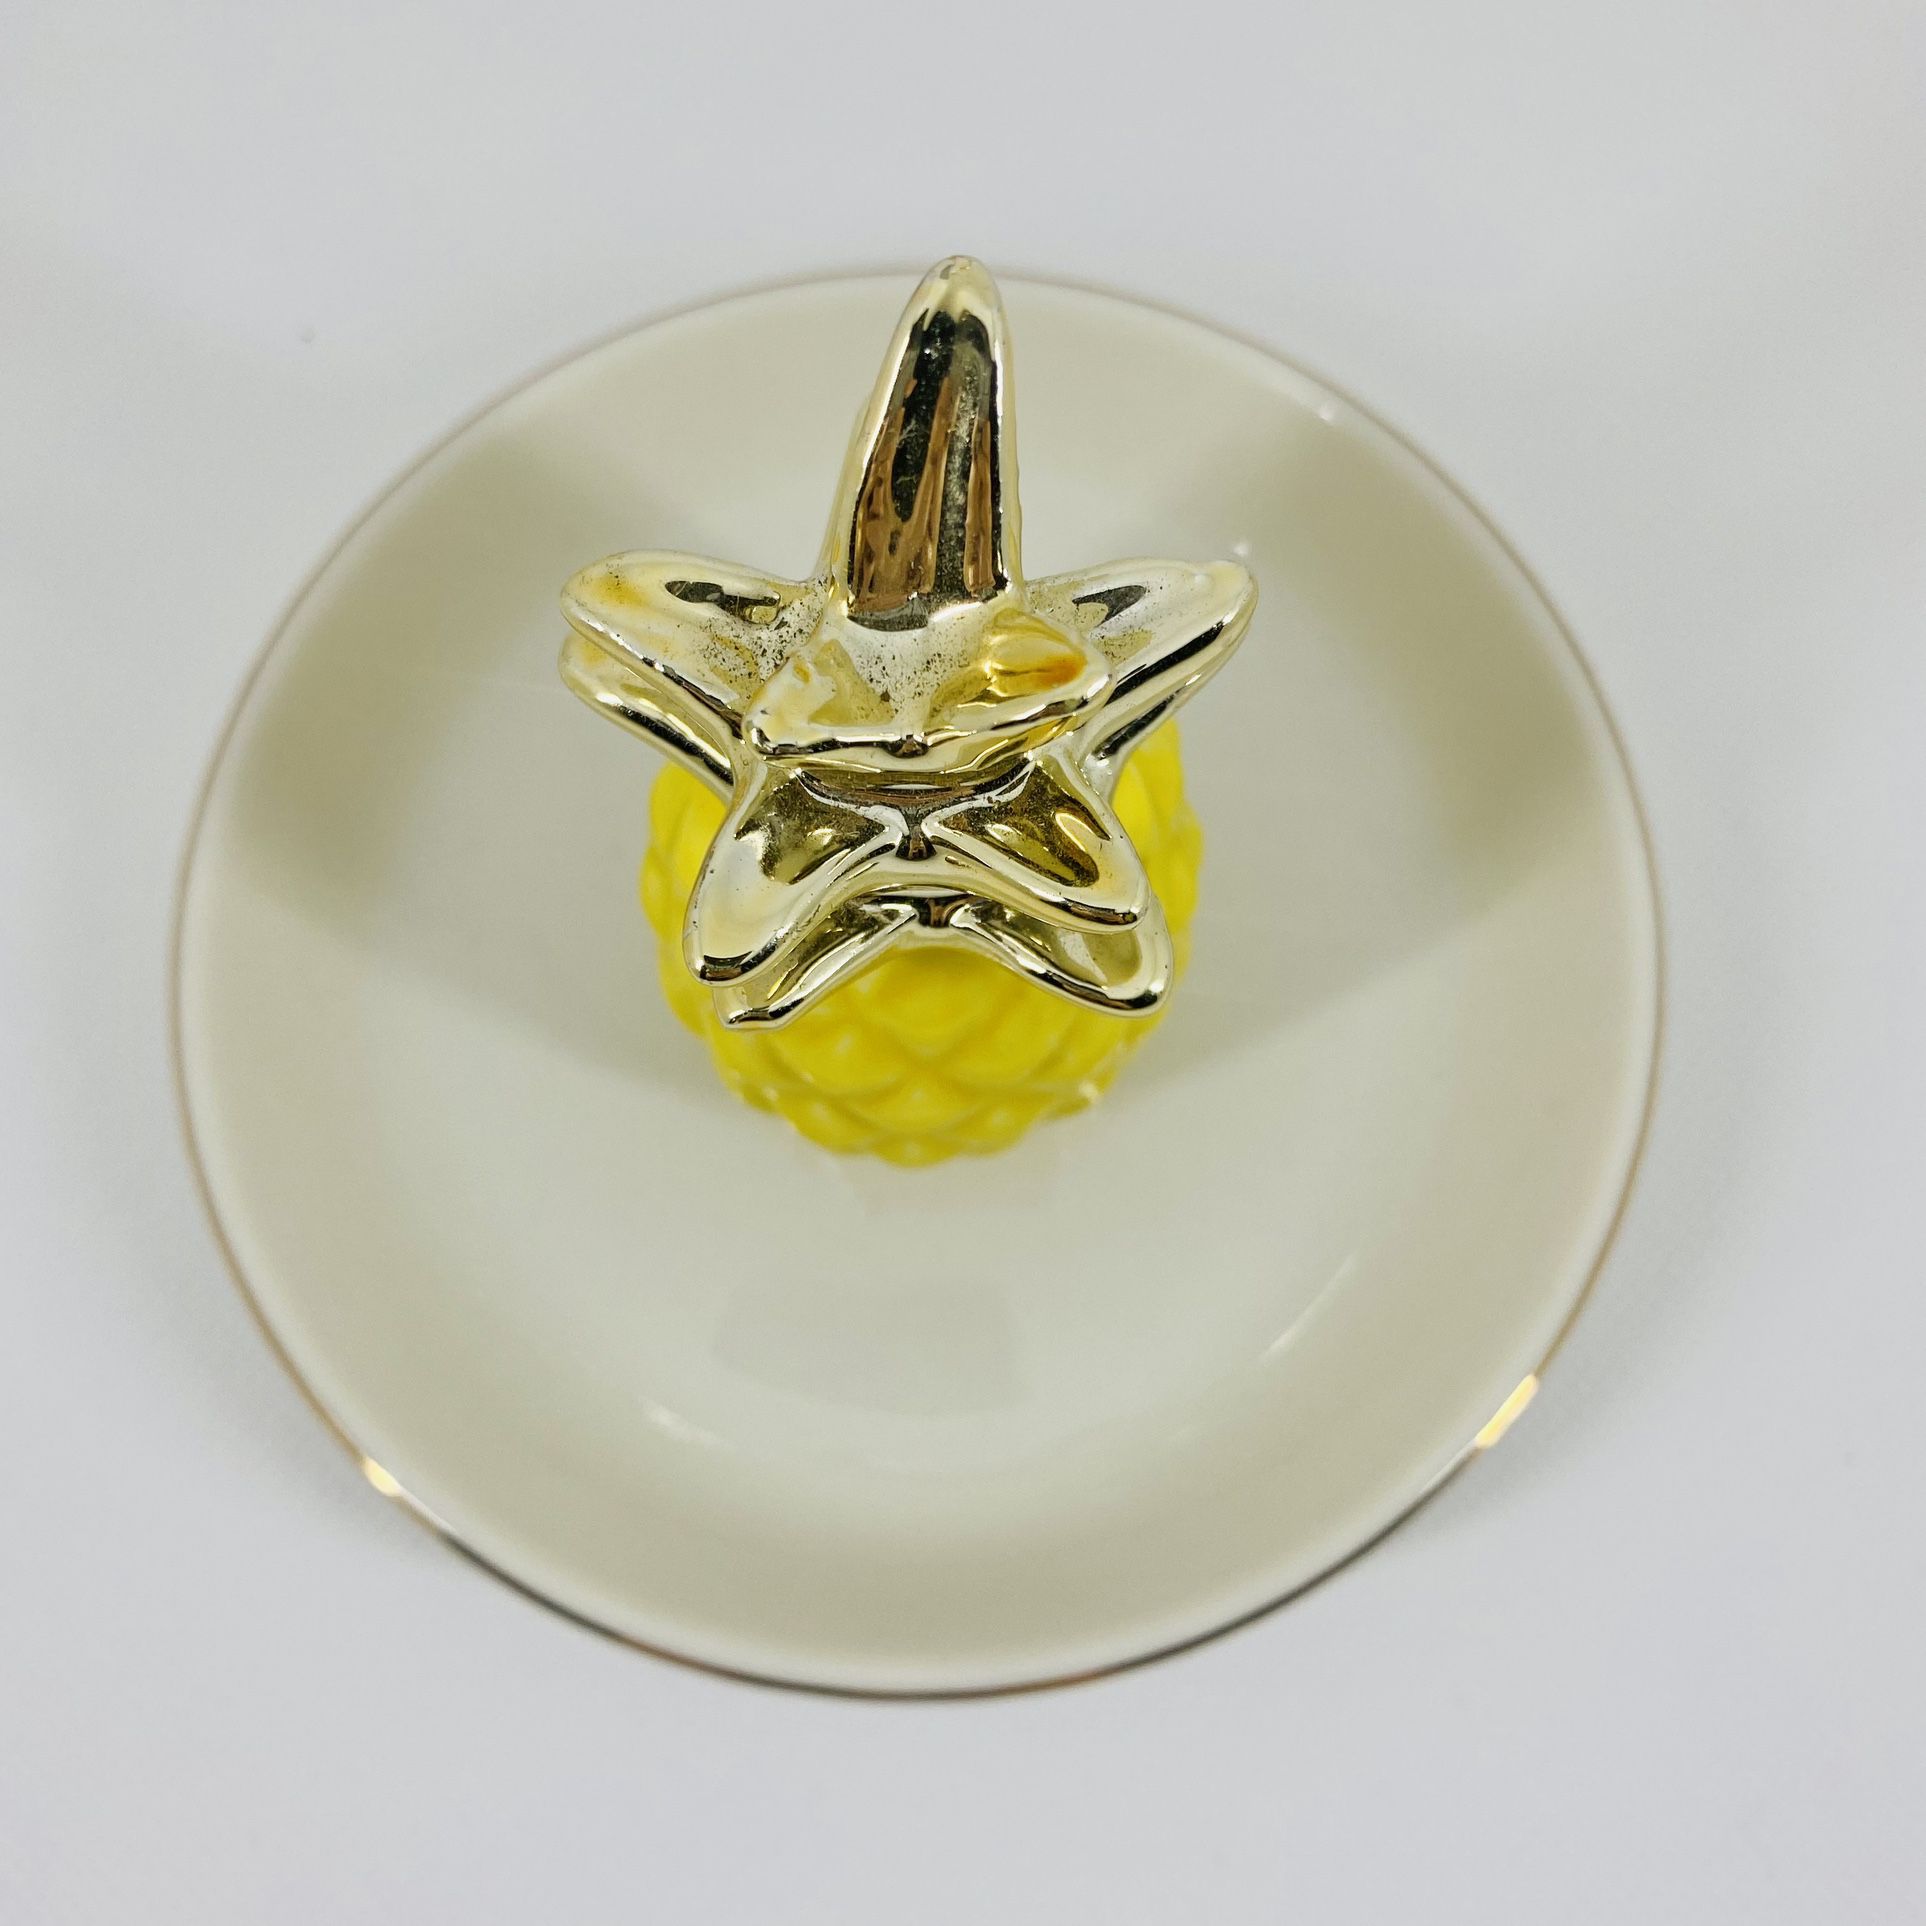 Pineapple Ring Holder Decor Ceramic Dish Plate Jewel Display Organizer